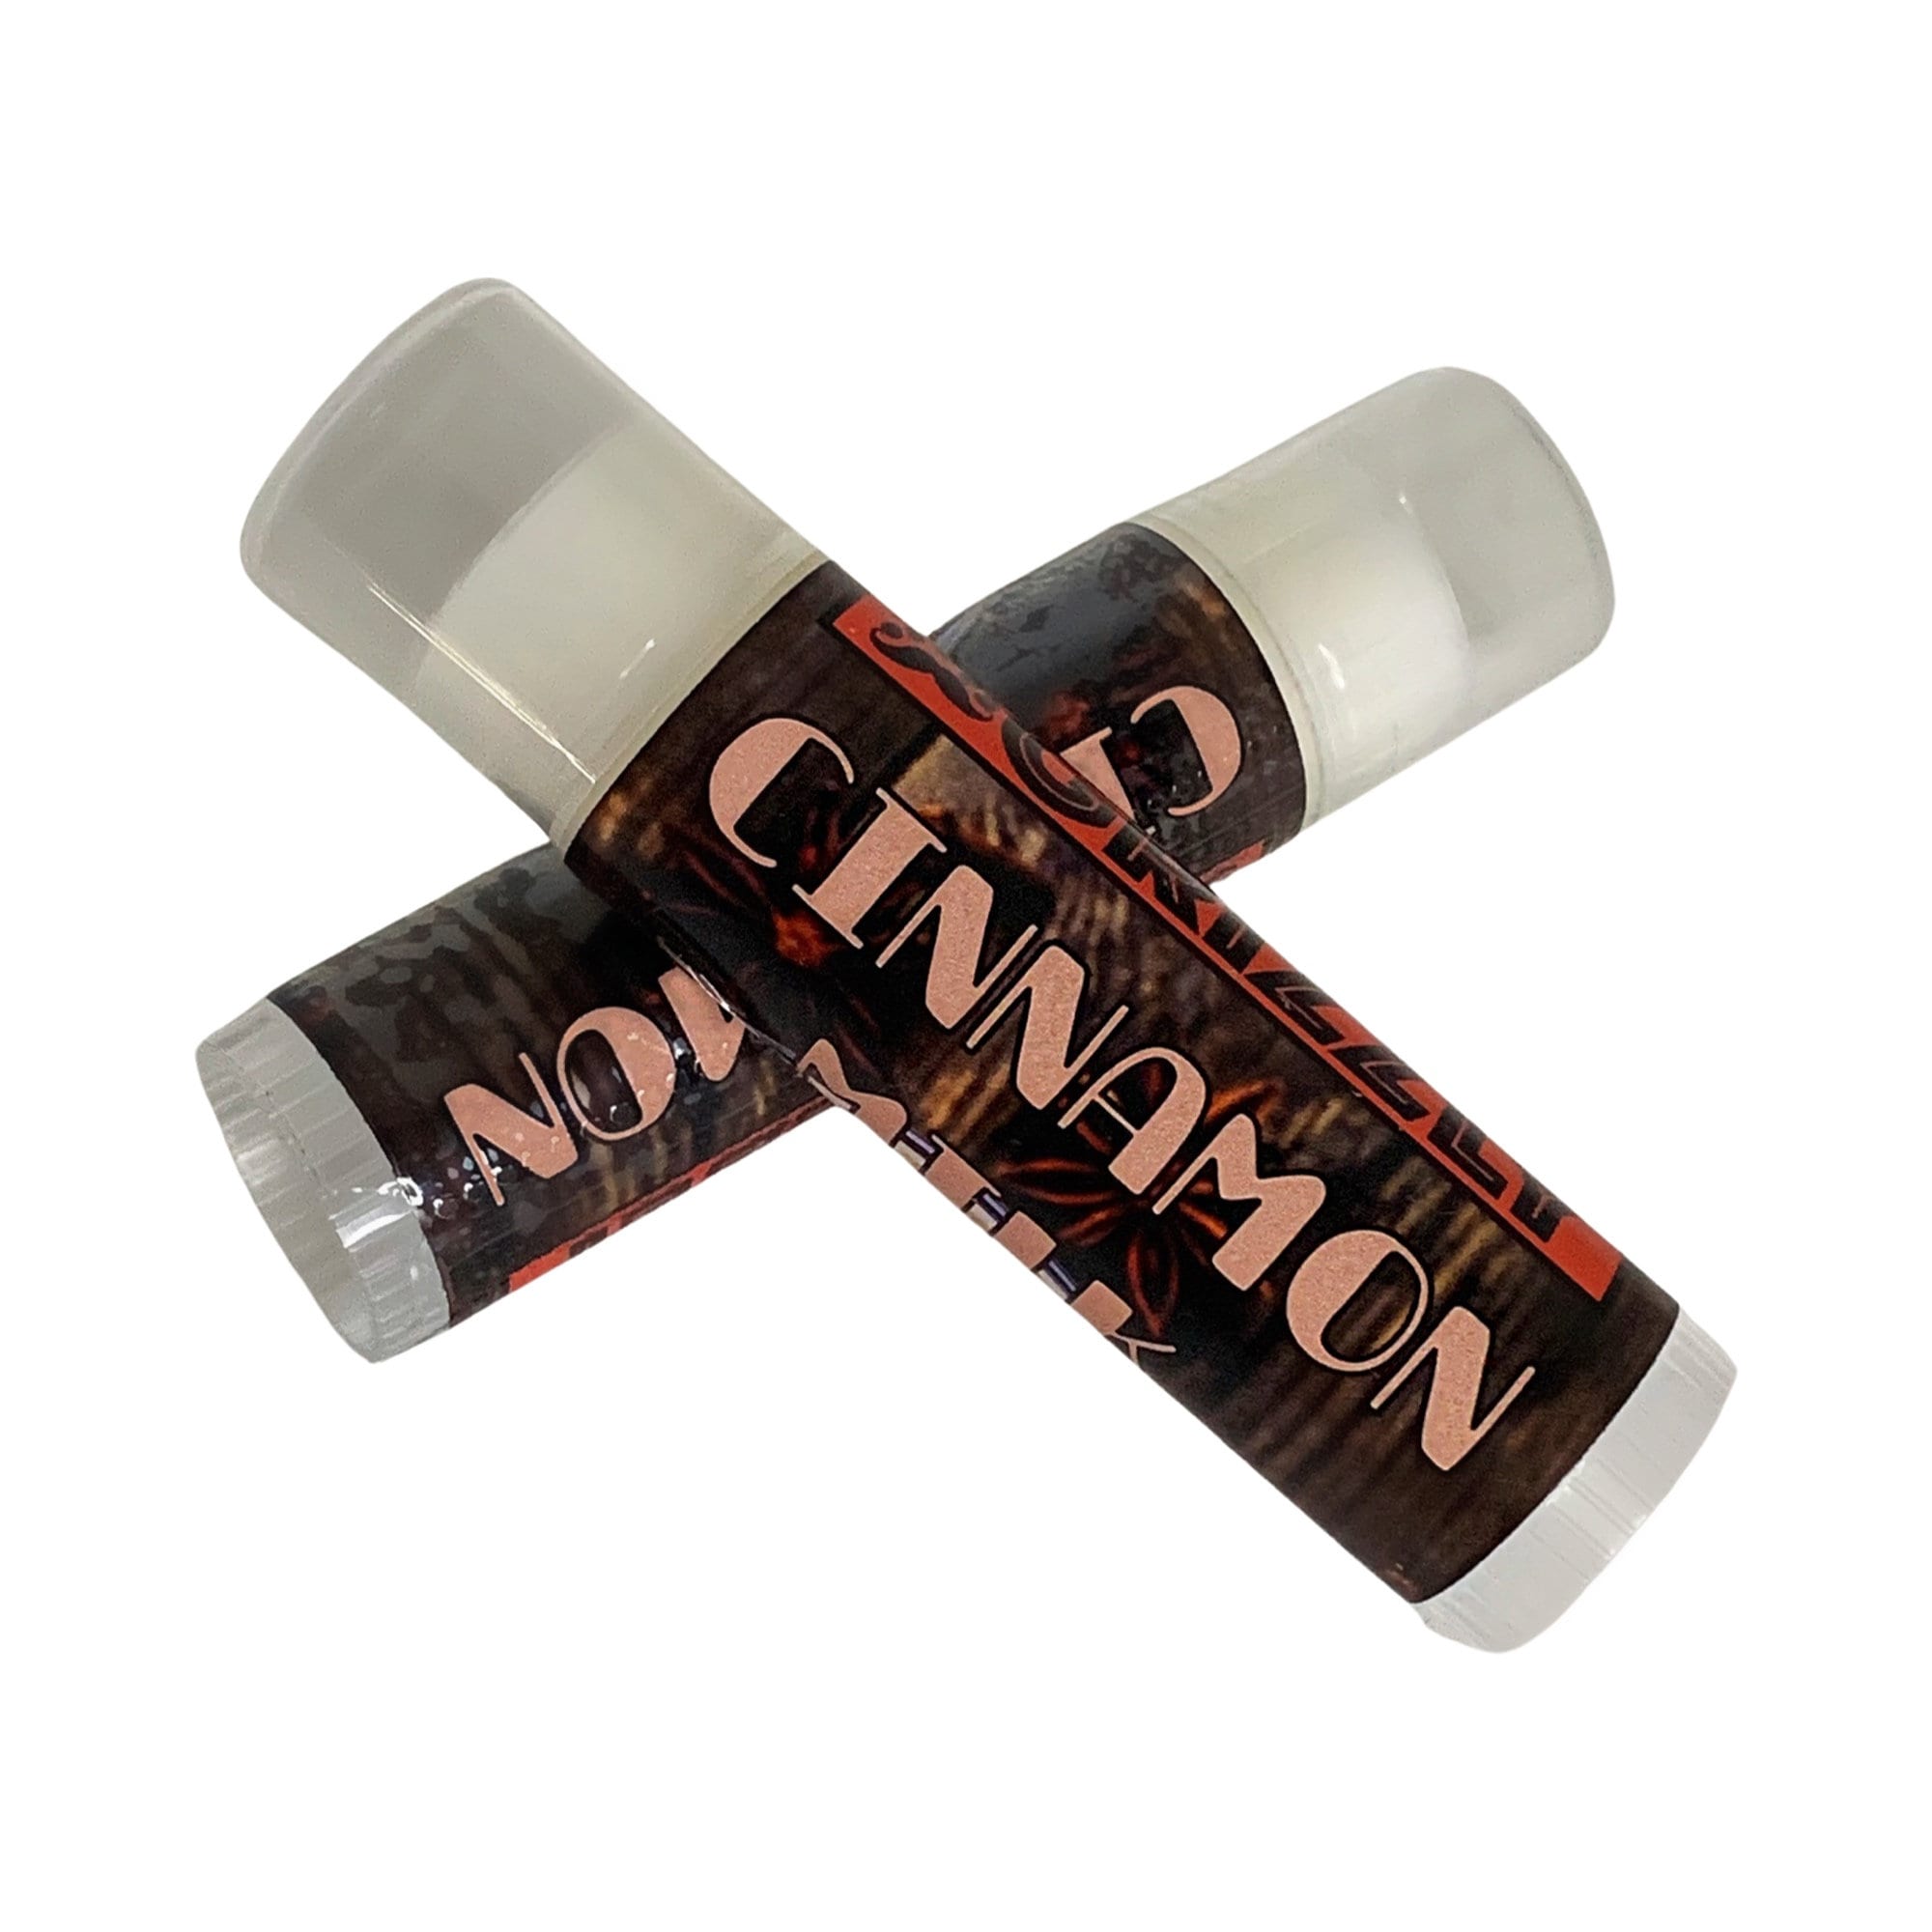 Horchata Cinnamon Roll Lip Balm Flavoring